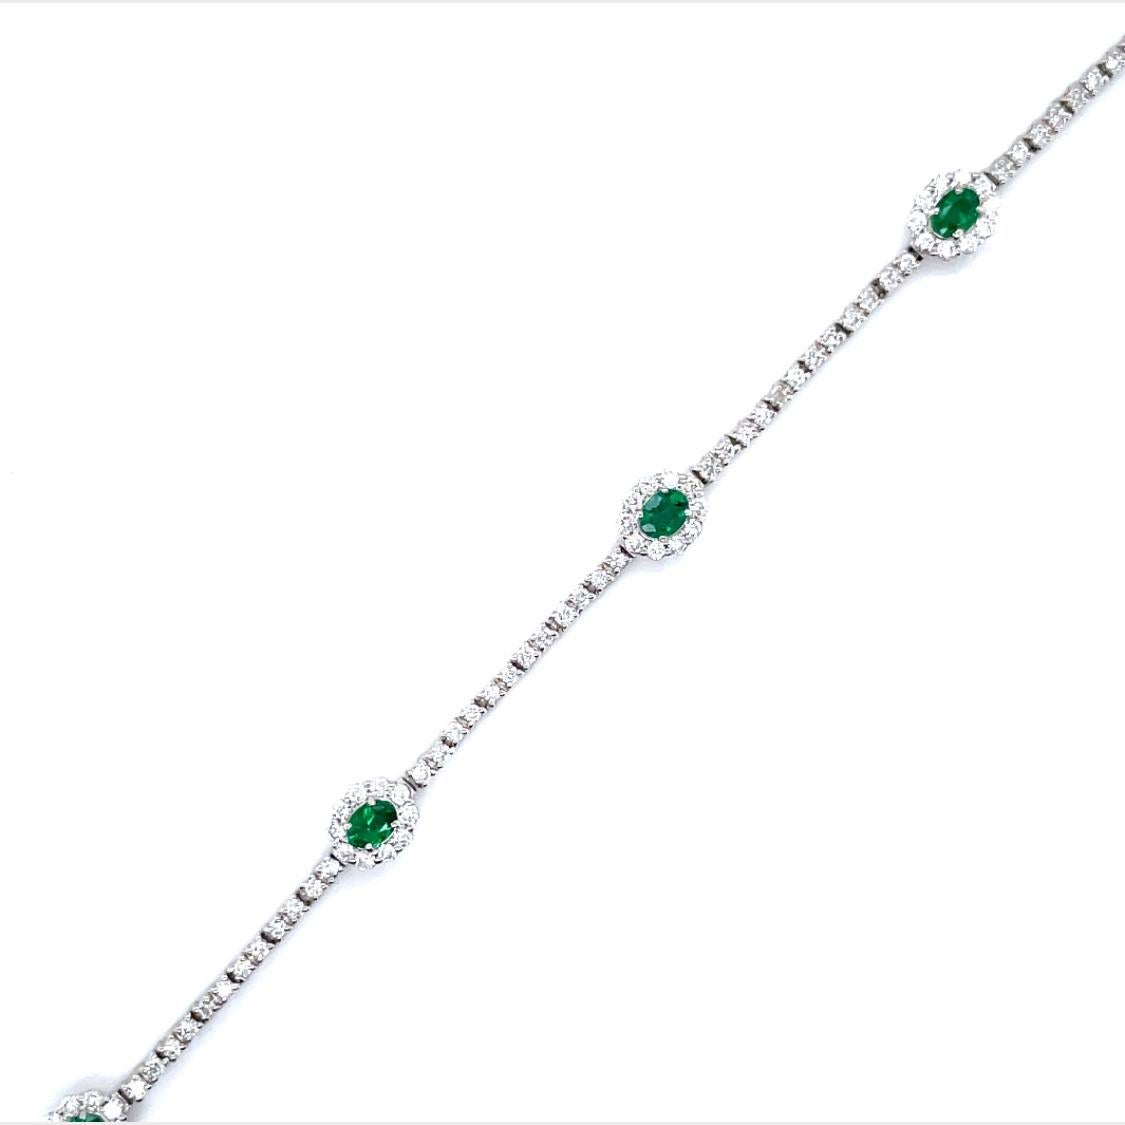 Women's 0.86 Carat Natural Emeralds and Diamonds Tennis Bracelet Set in Platinum